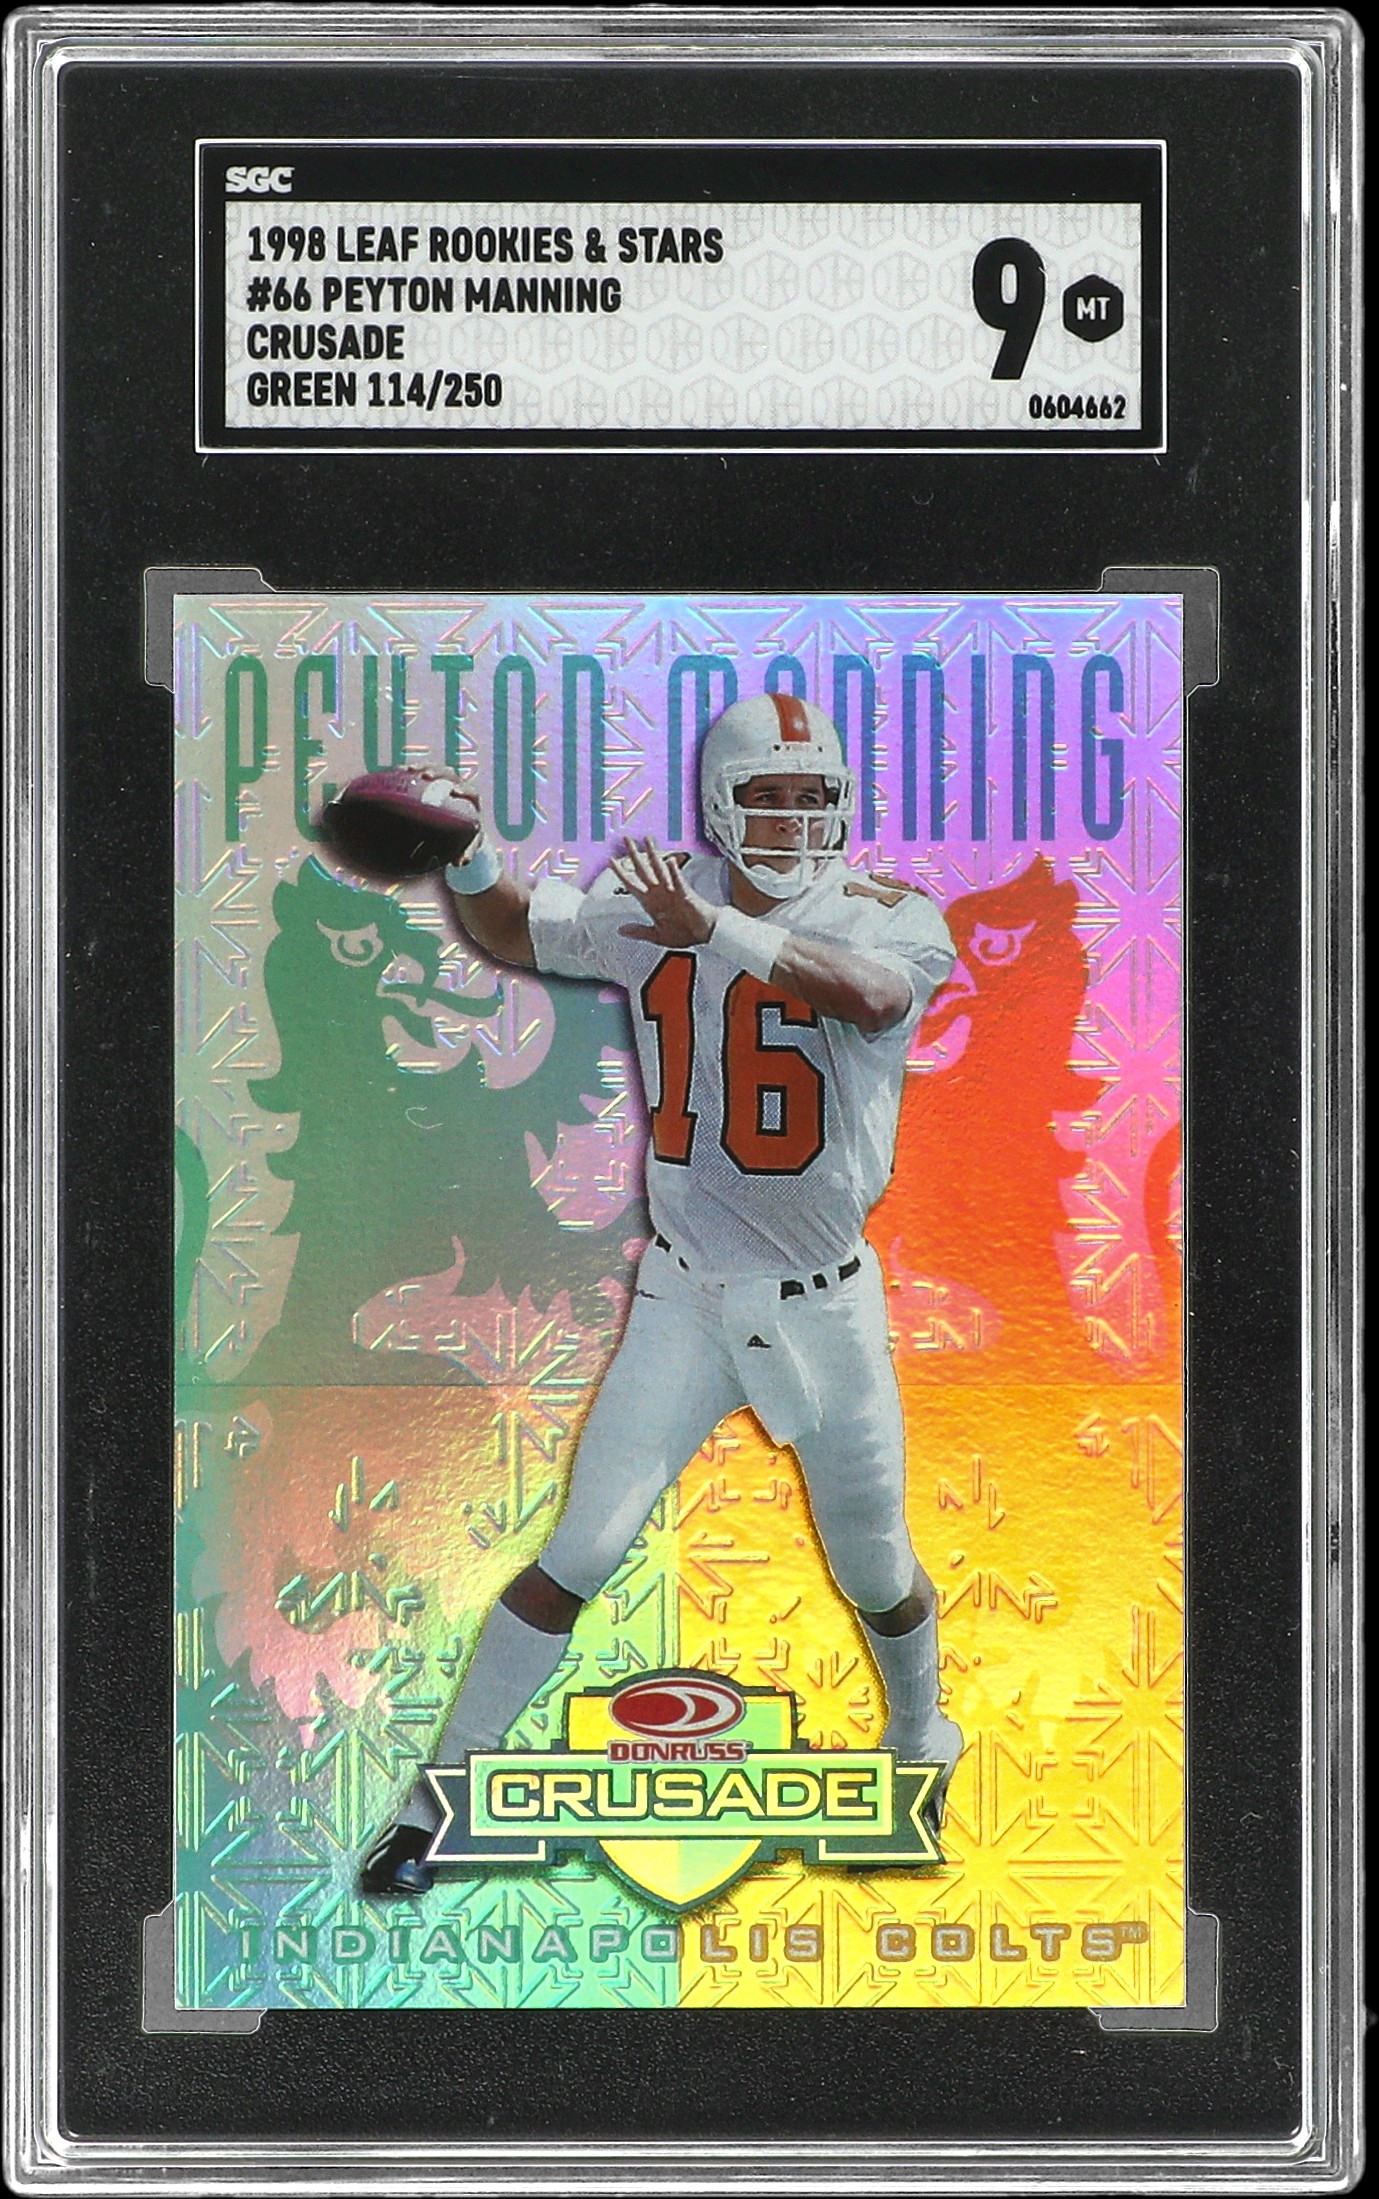 1998 Leaf Rookies & Stars Crusade Green #66 Peyton Manning Rookie Card (#114/250) – SGC MT 9